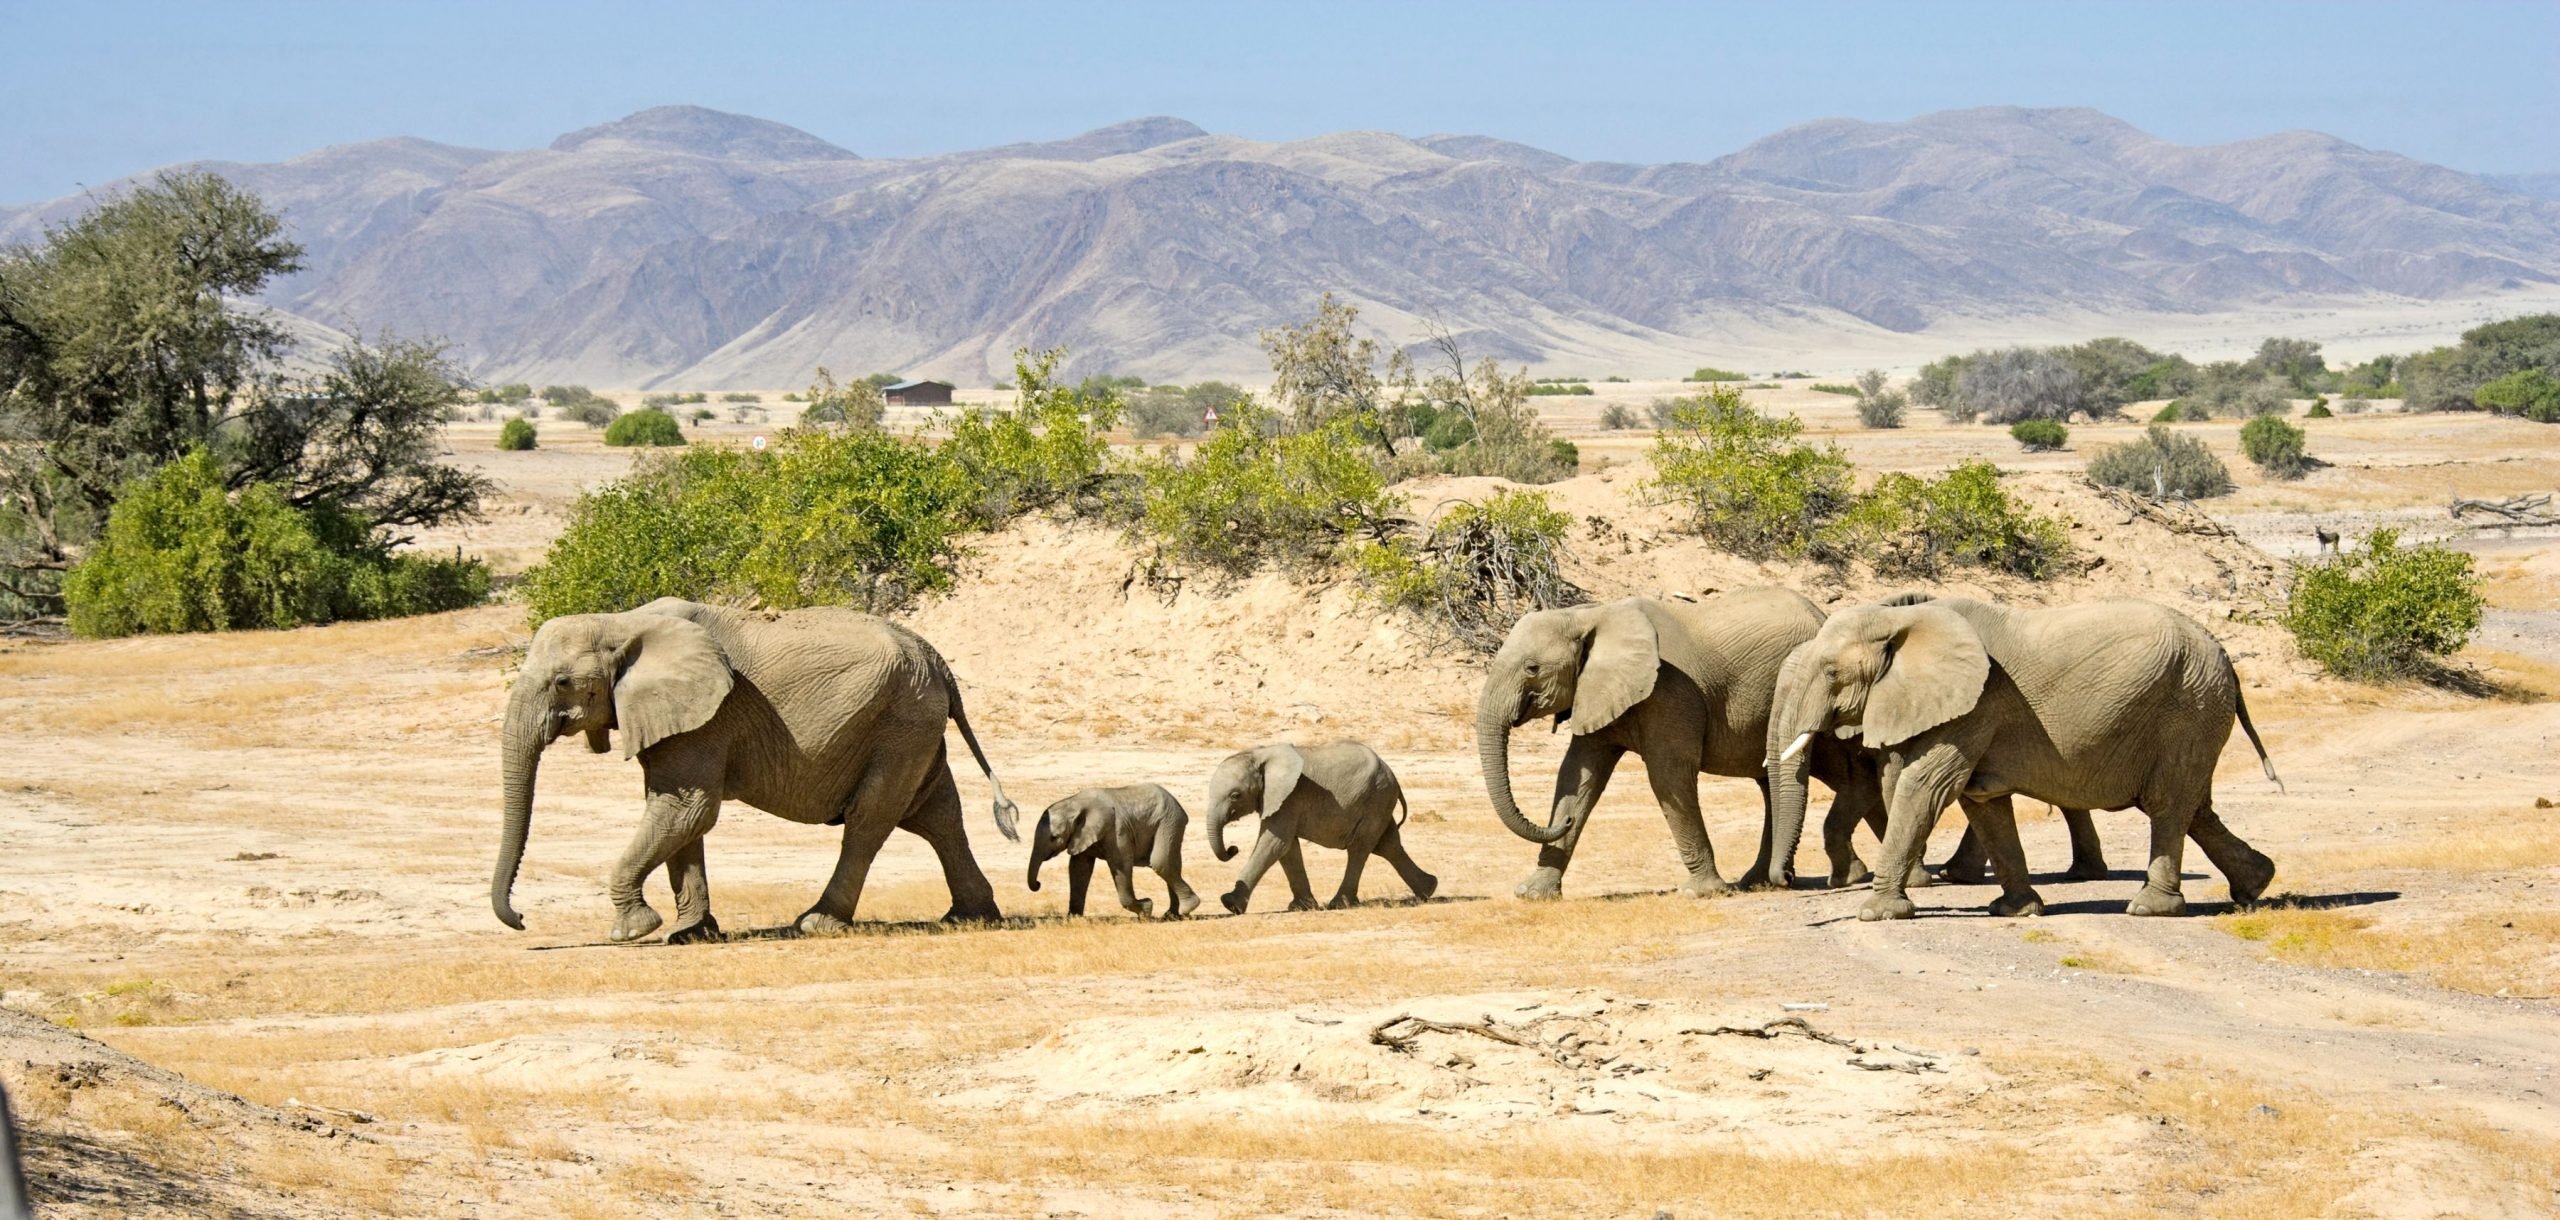 Elephants crossing the plains of Namibia.